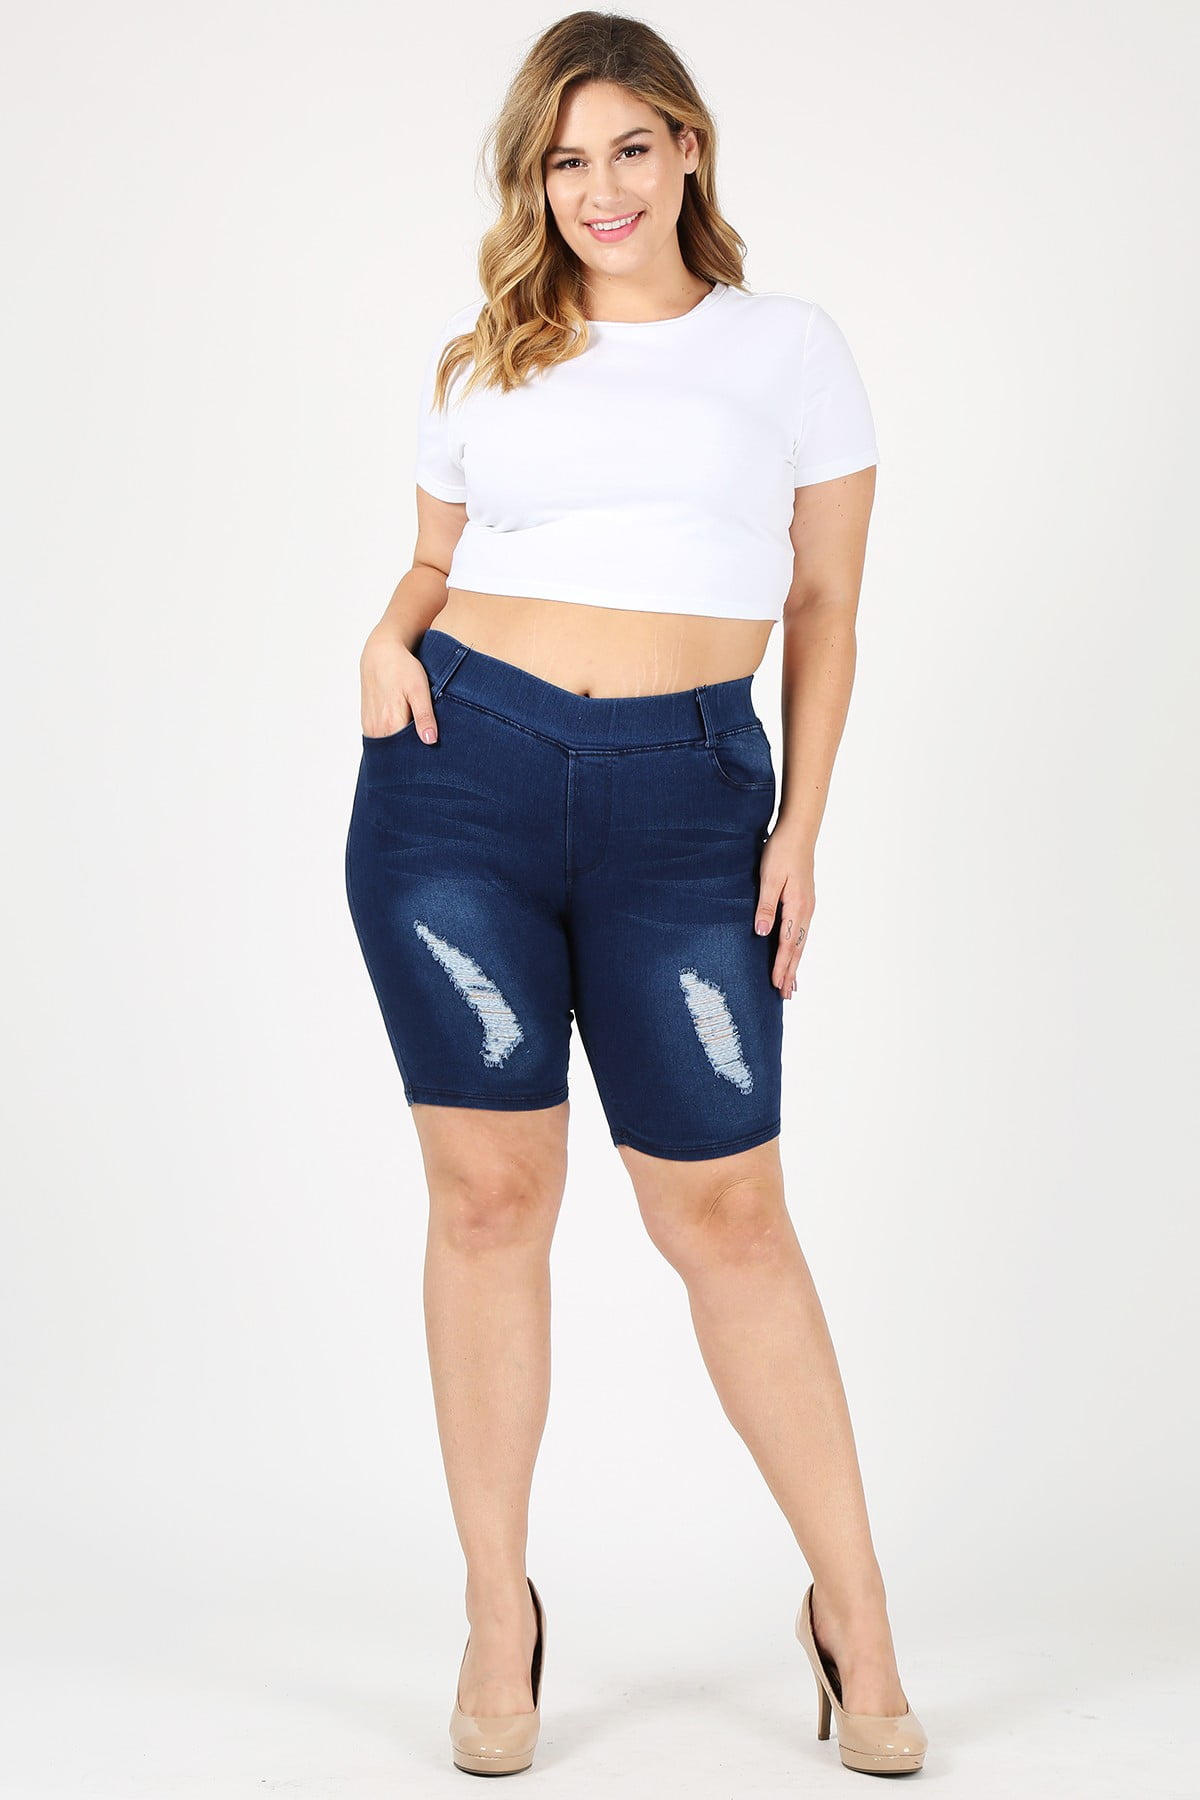 Plus size women pull-on 5 pockets classic jeans Bermudas shorts ...